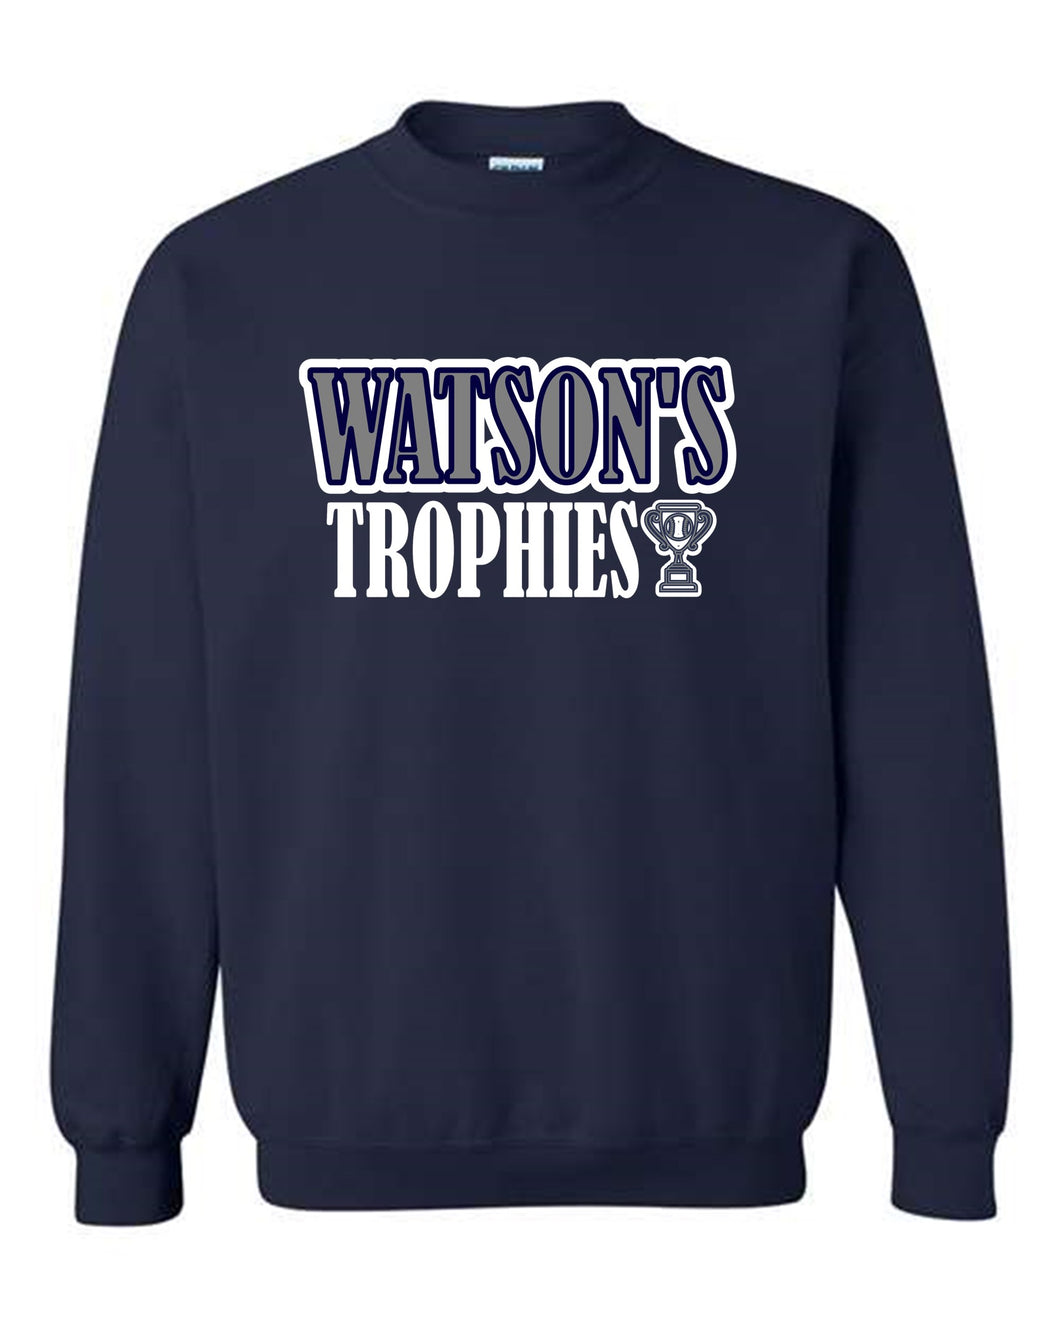 Watson's Trophies Crewneck Sweatshirt - Youth and Adult